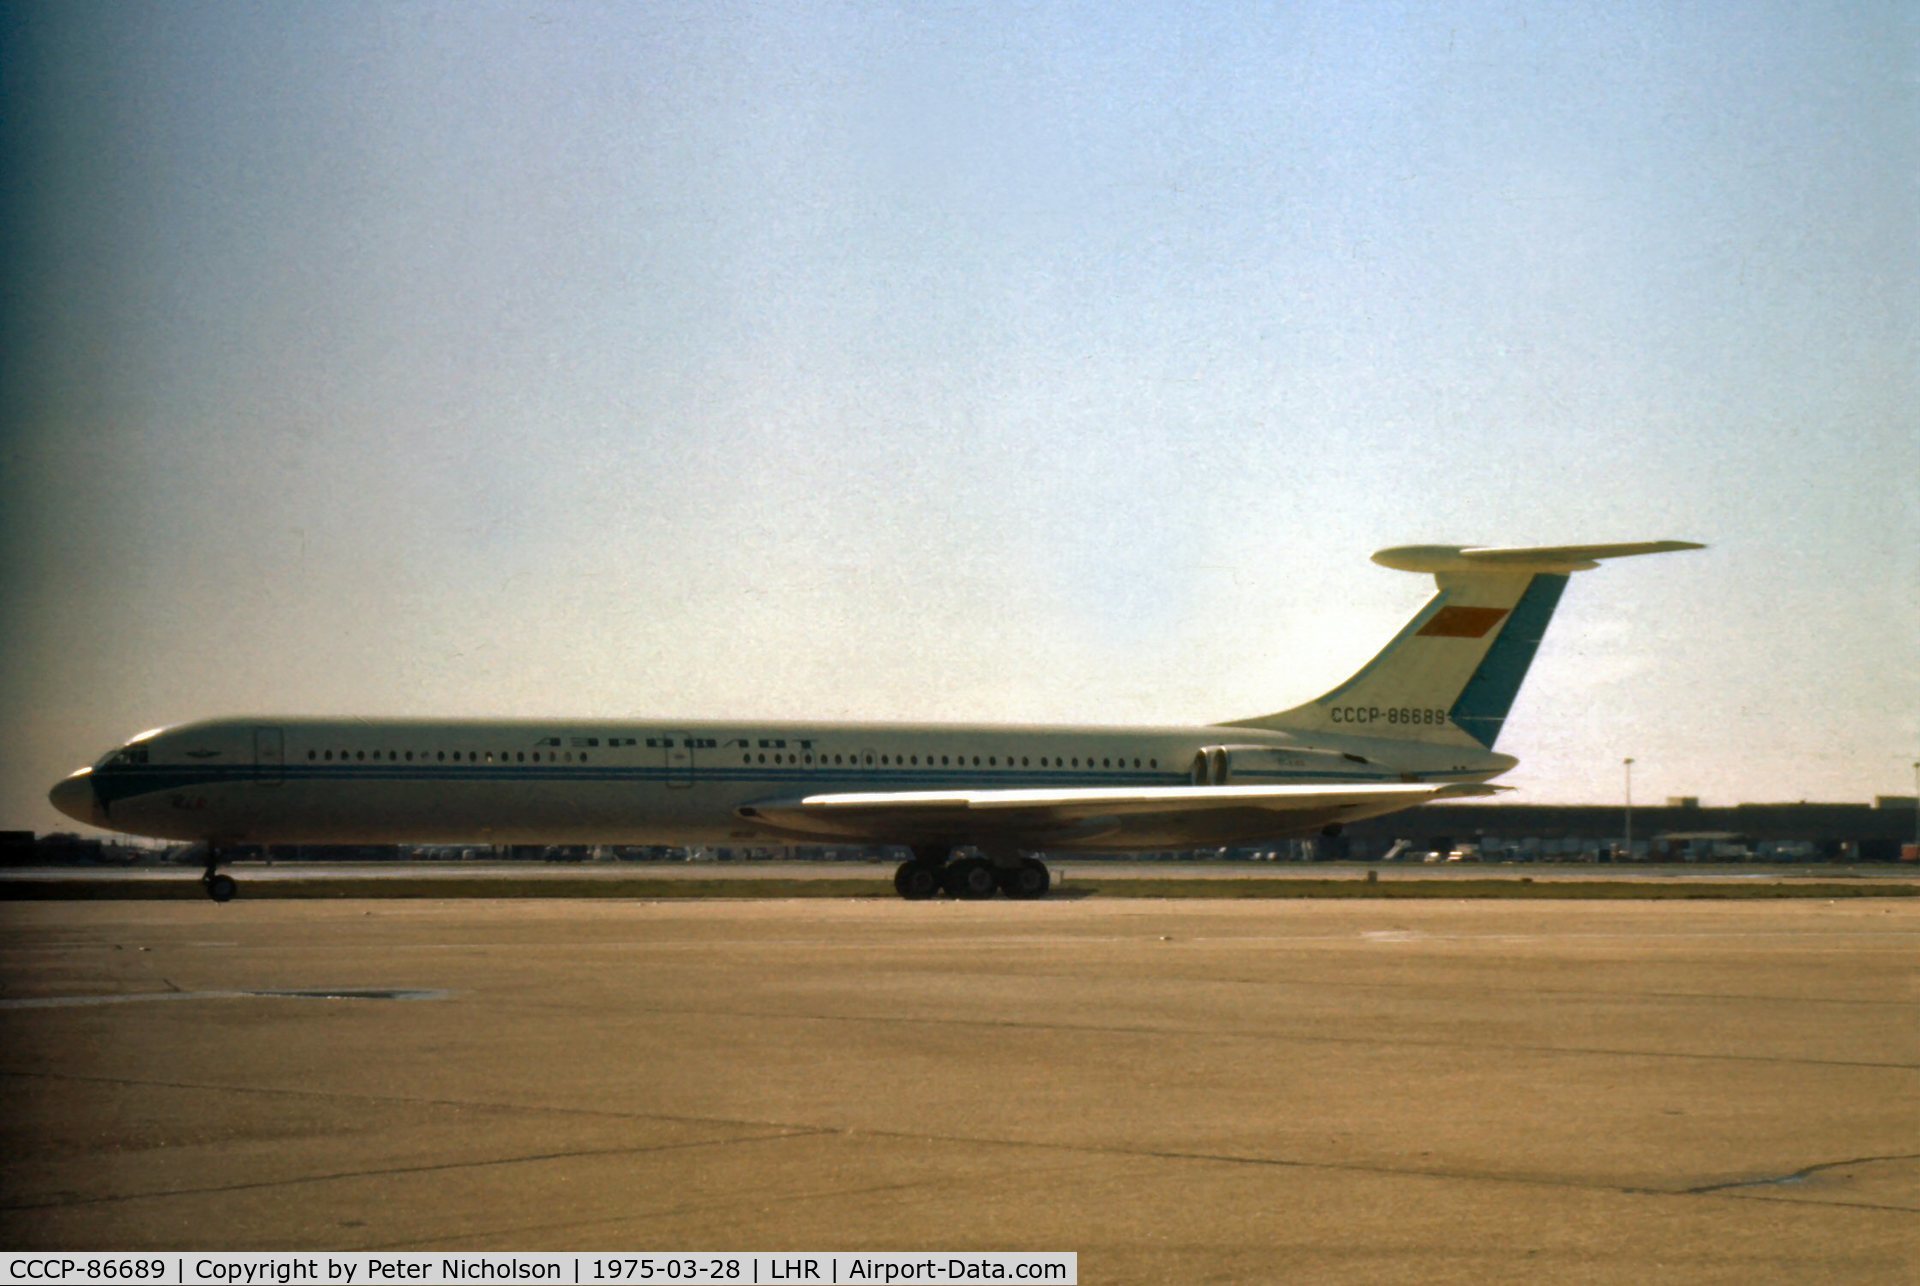 CCCP-86689, 1971 Ilyushin IL-62 C/N 11001, Ilyushin Il-62 Classic of Aeroflot at Heathrow in the Spring of 1975.